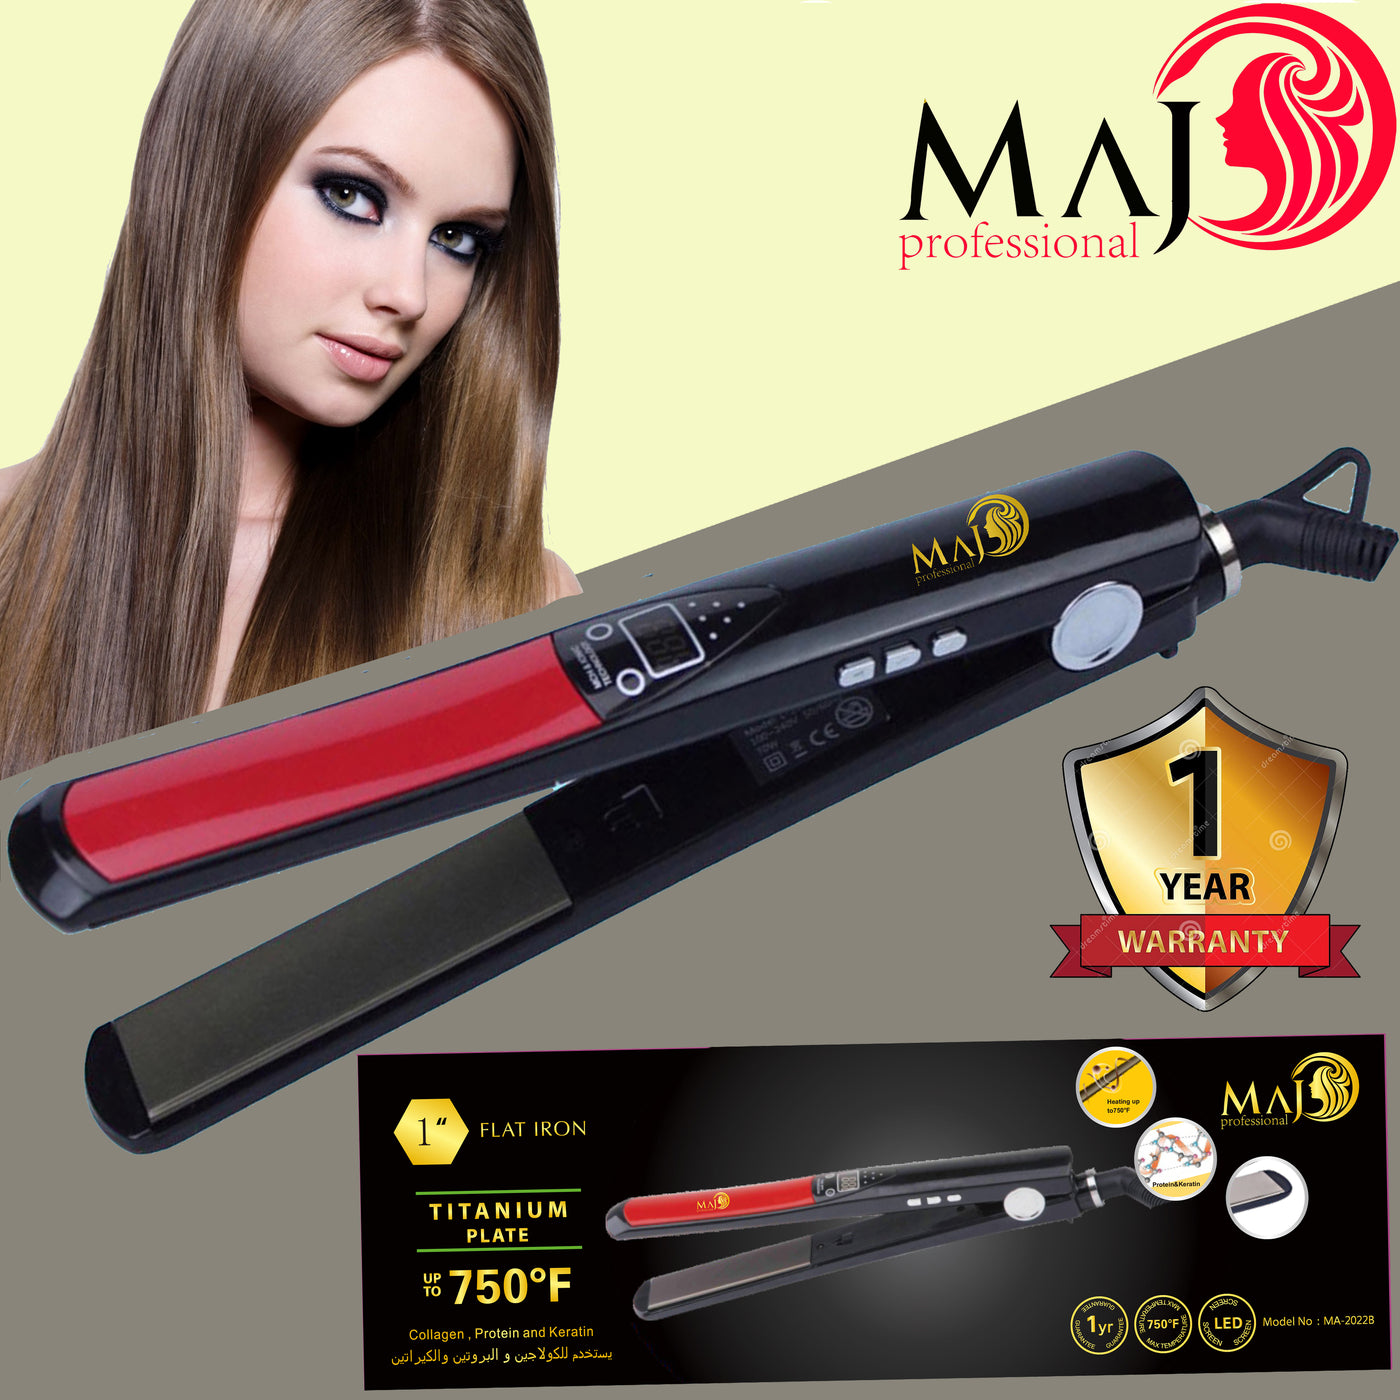 MAJ Professional 750F Ceramic Hair Straightener